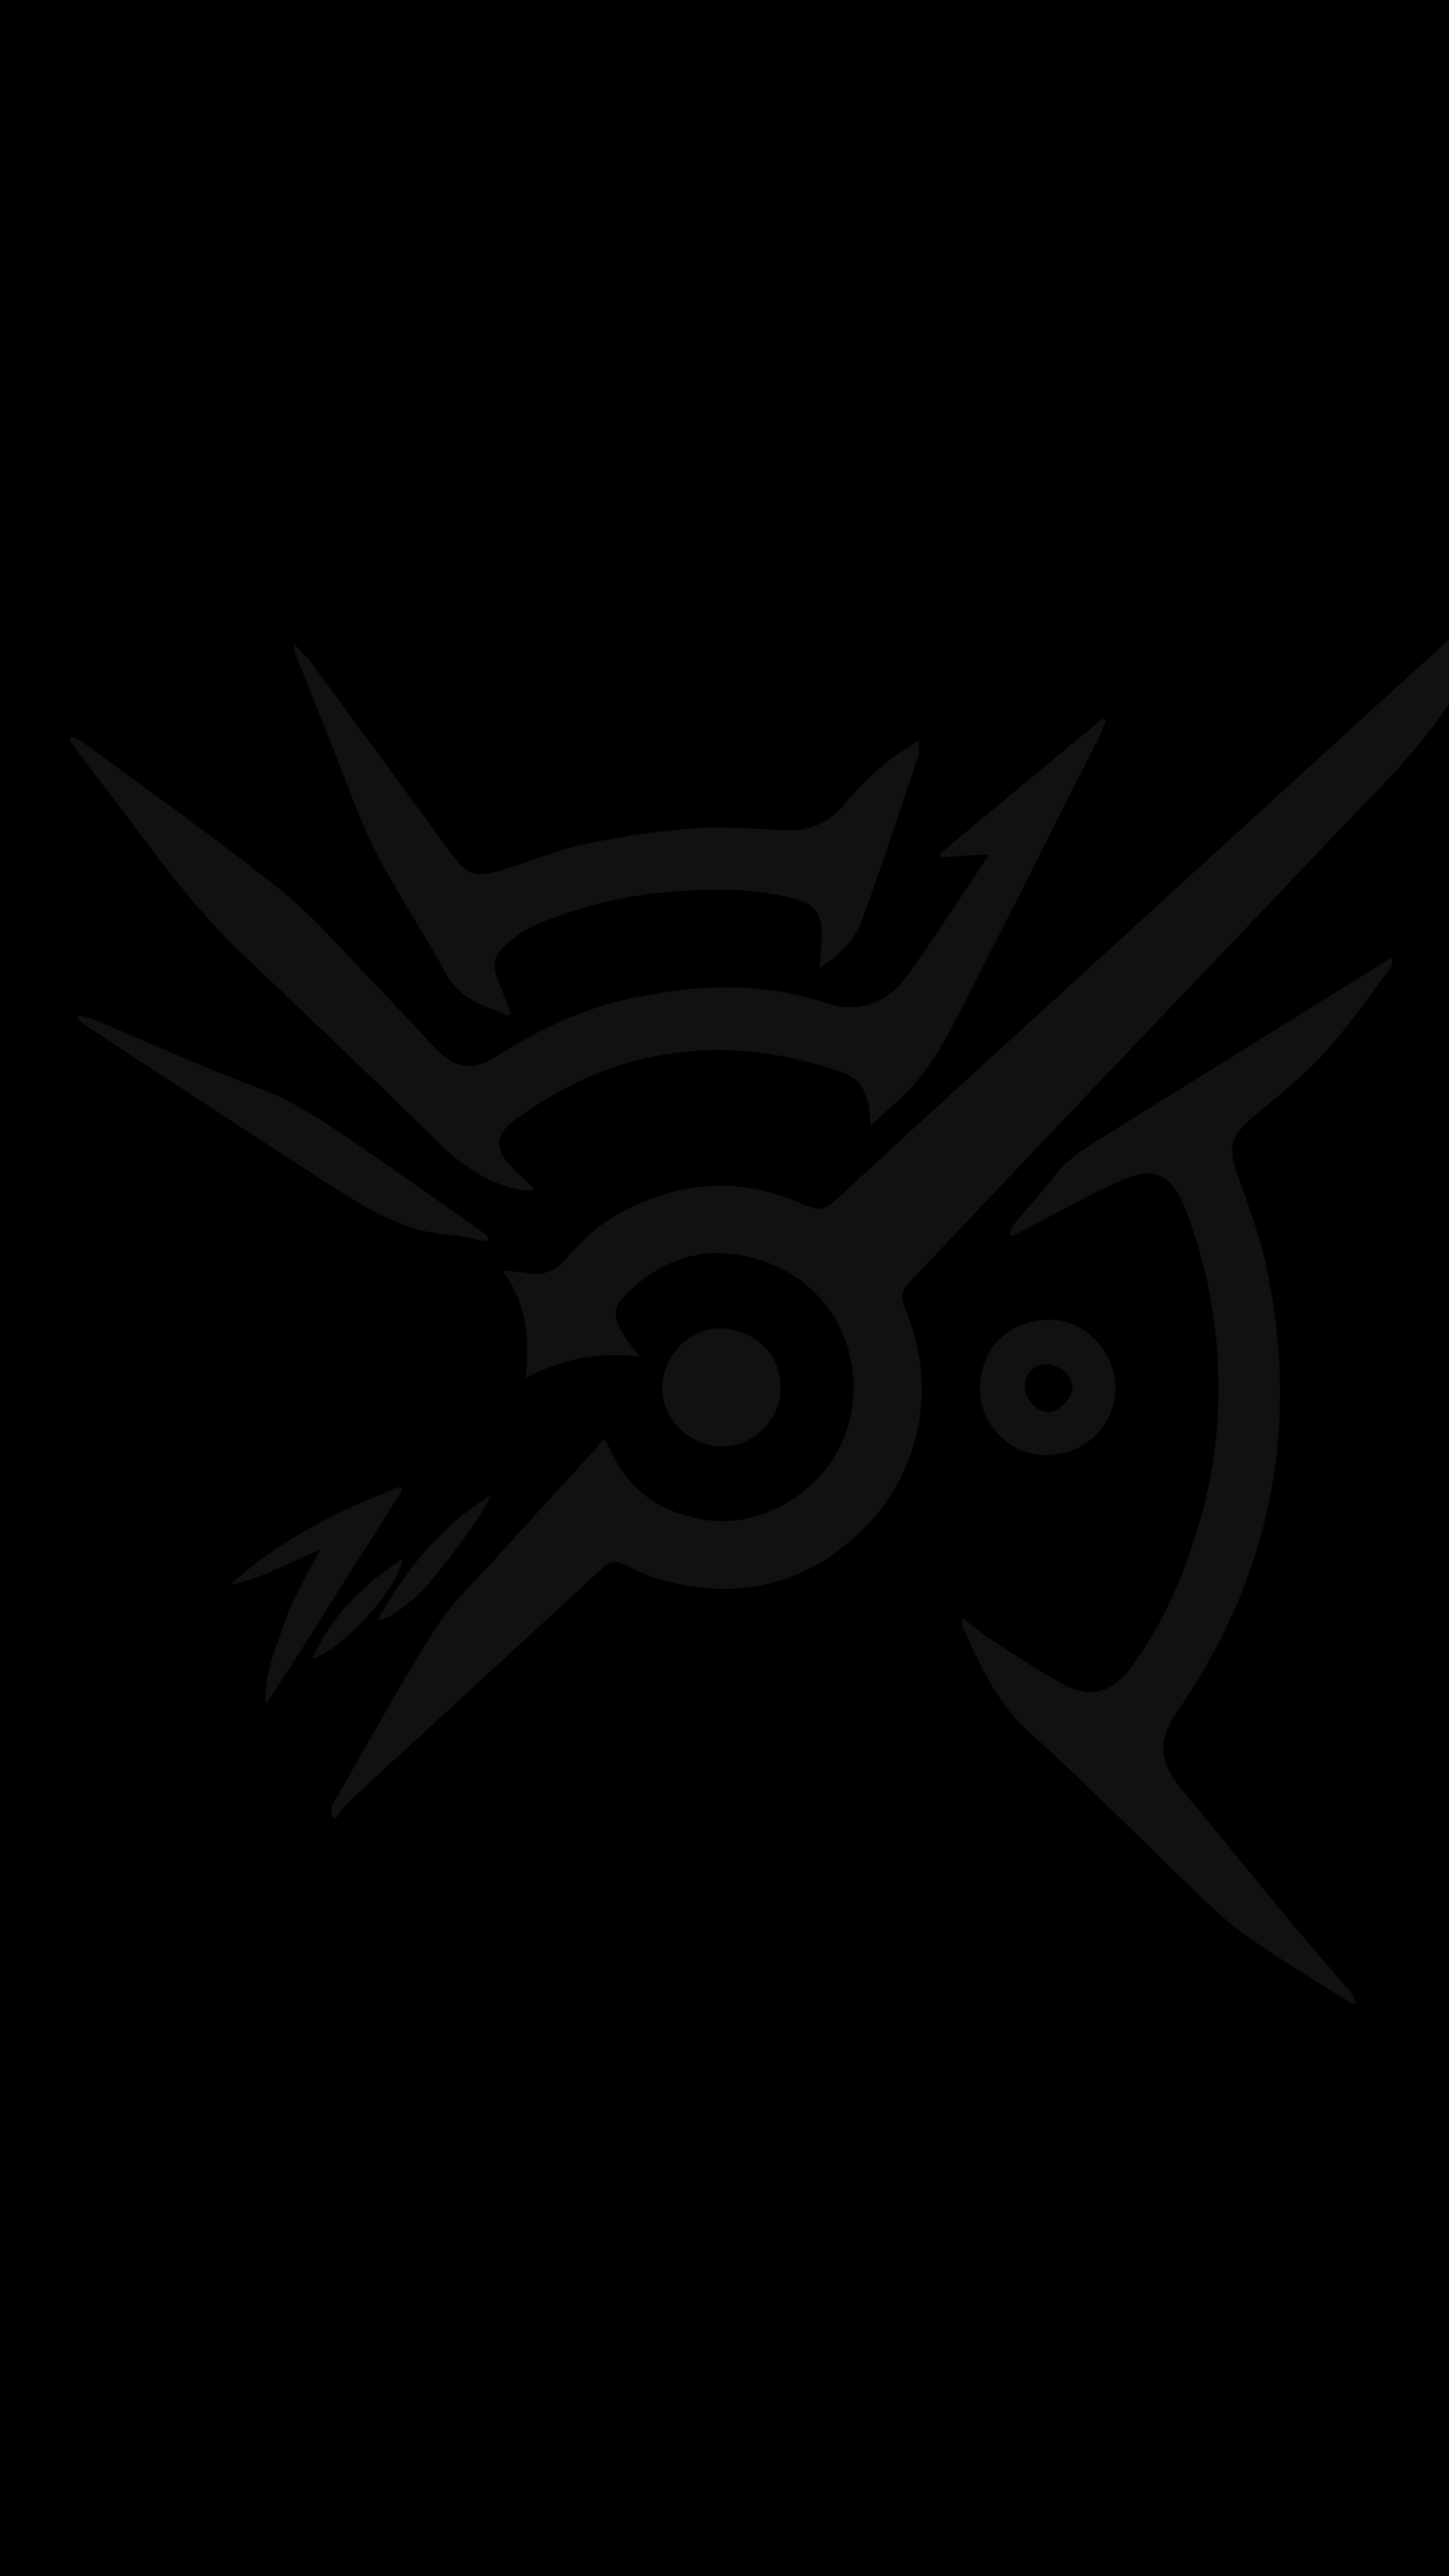 Dishonored logo on black screen, dark.